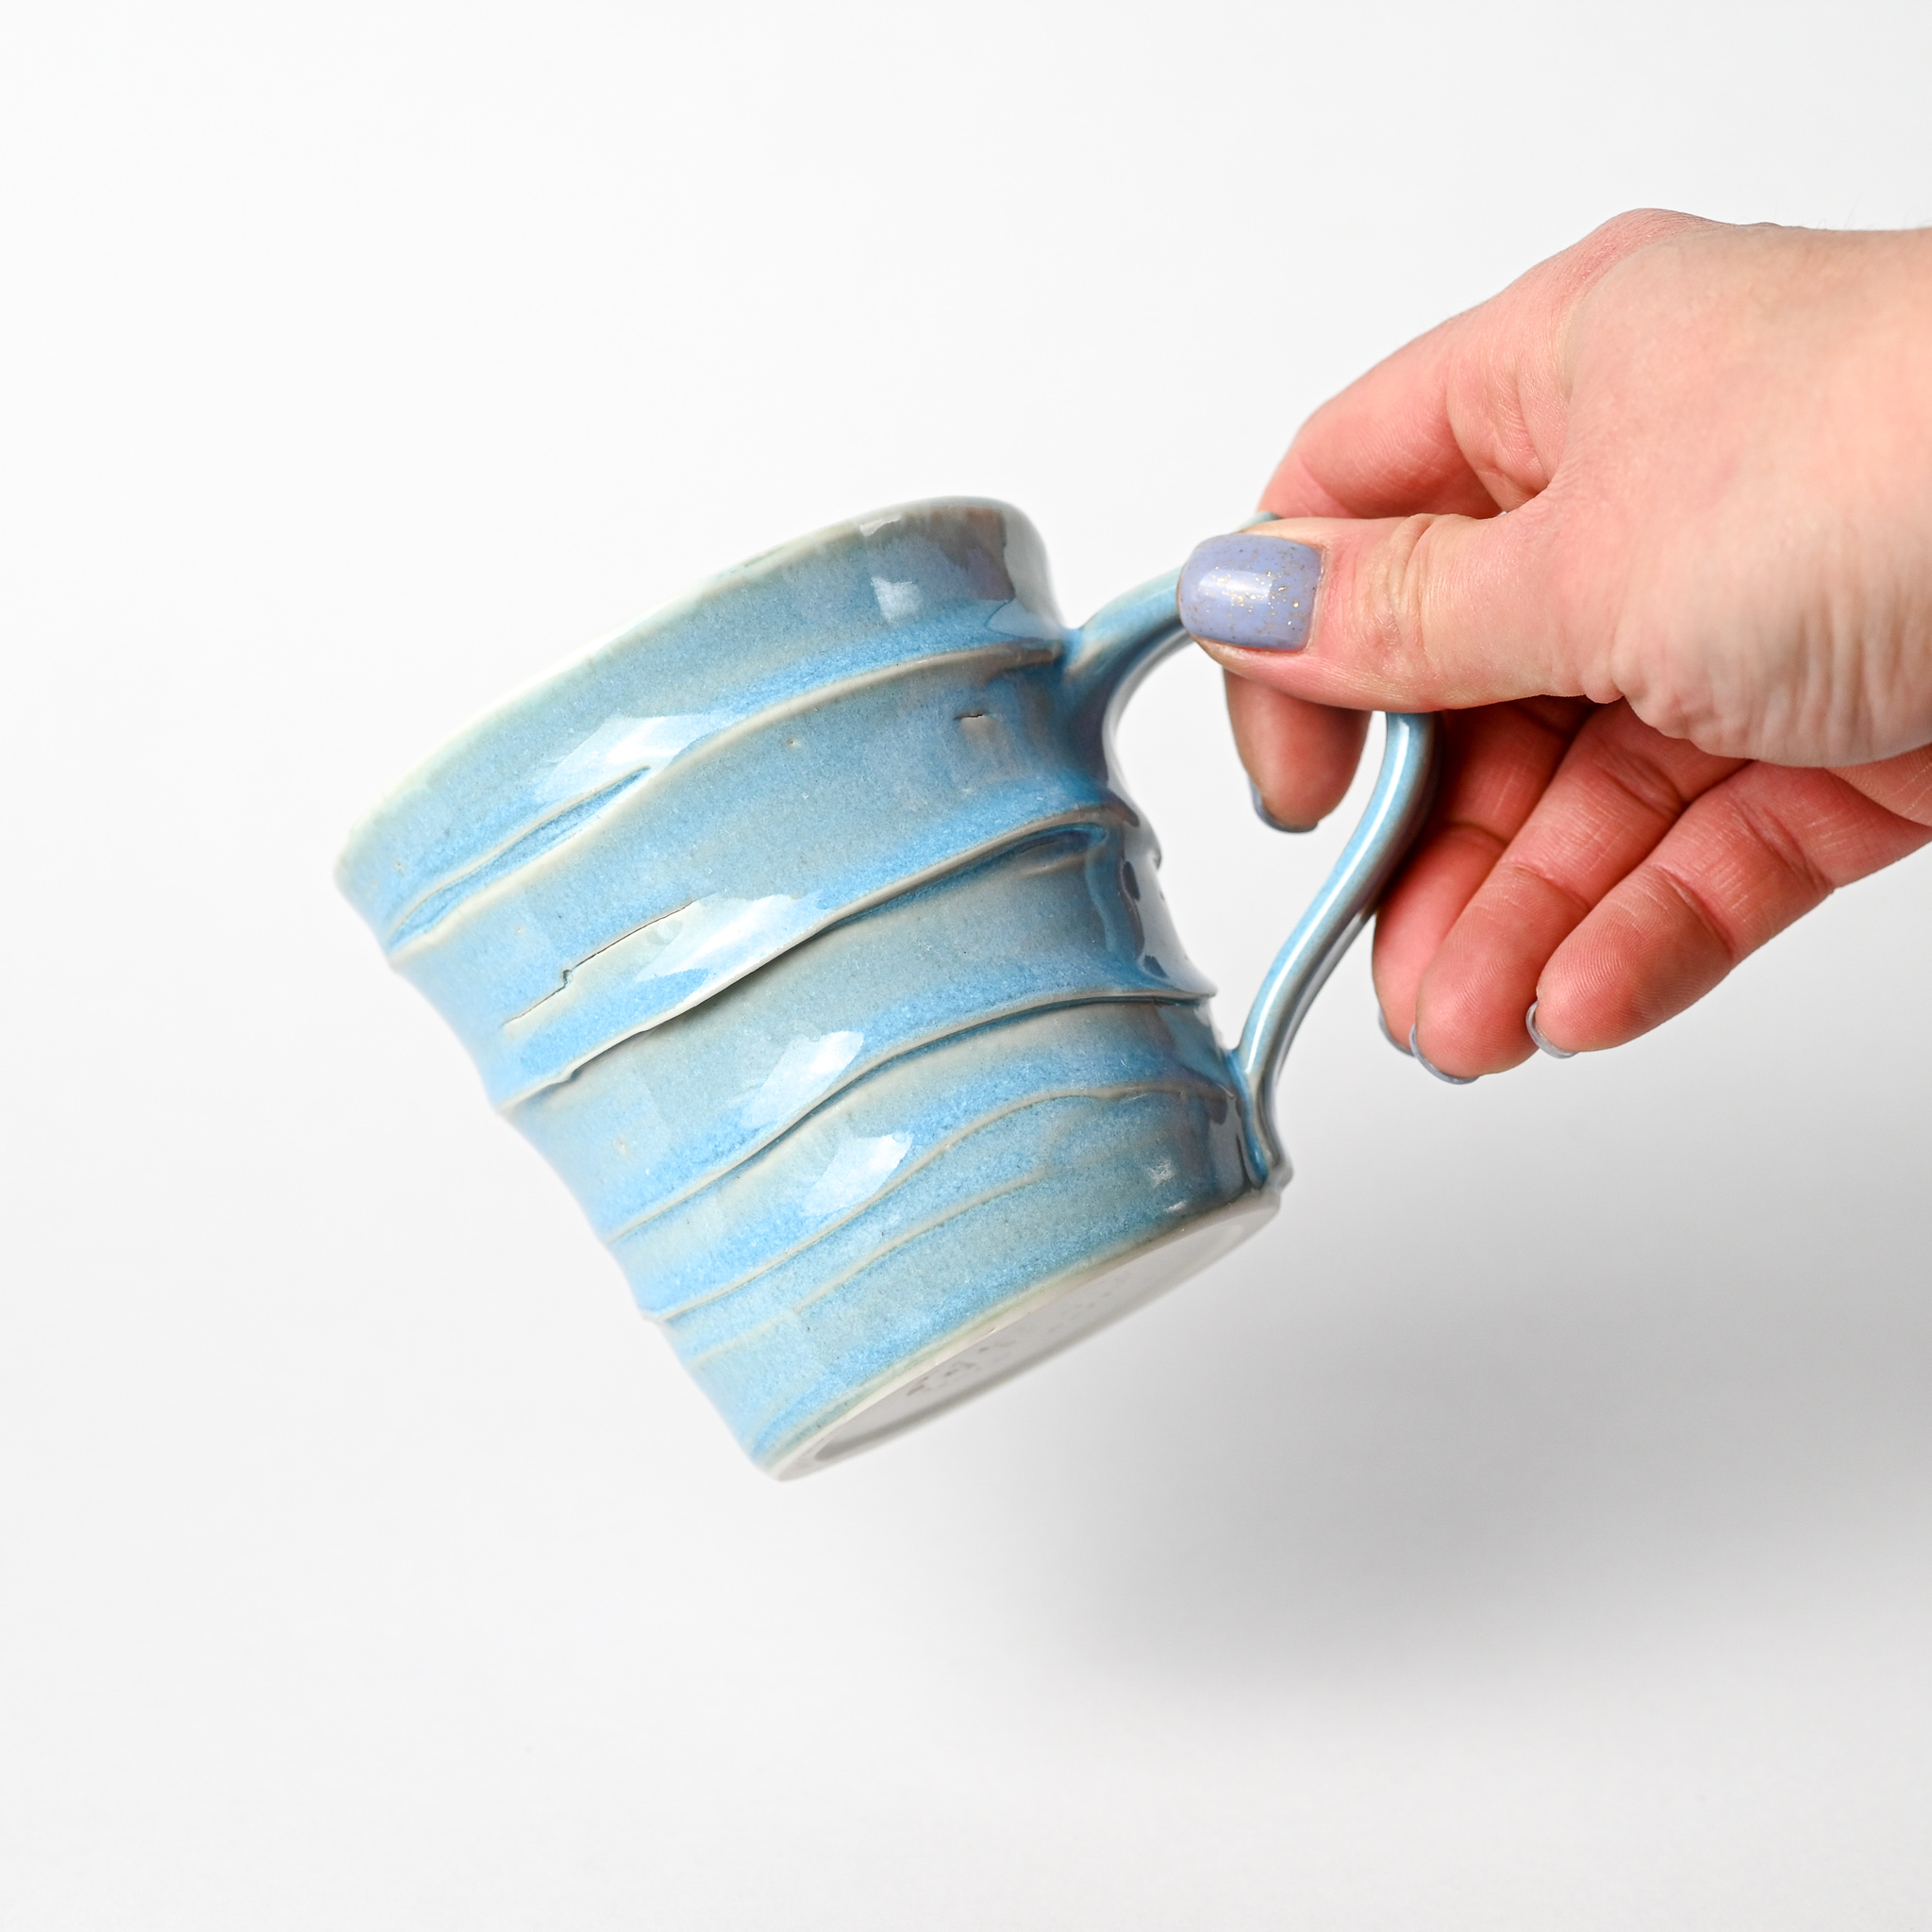 картинка Чайная пара Pottery Atelier голубая - DishWishes.Ru